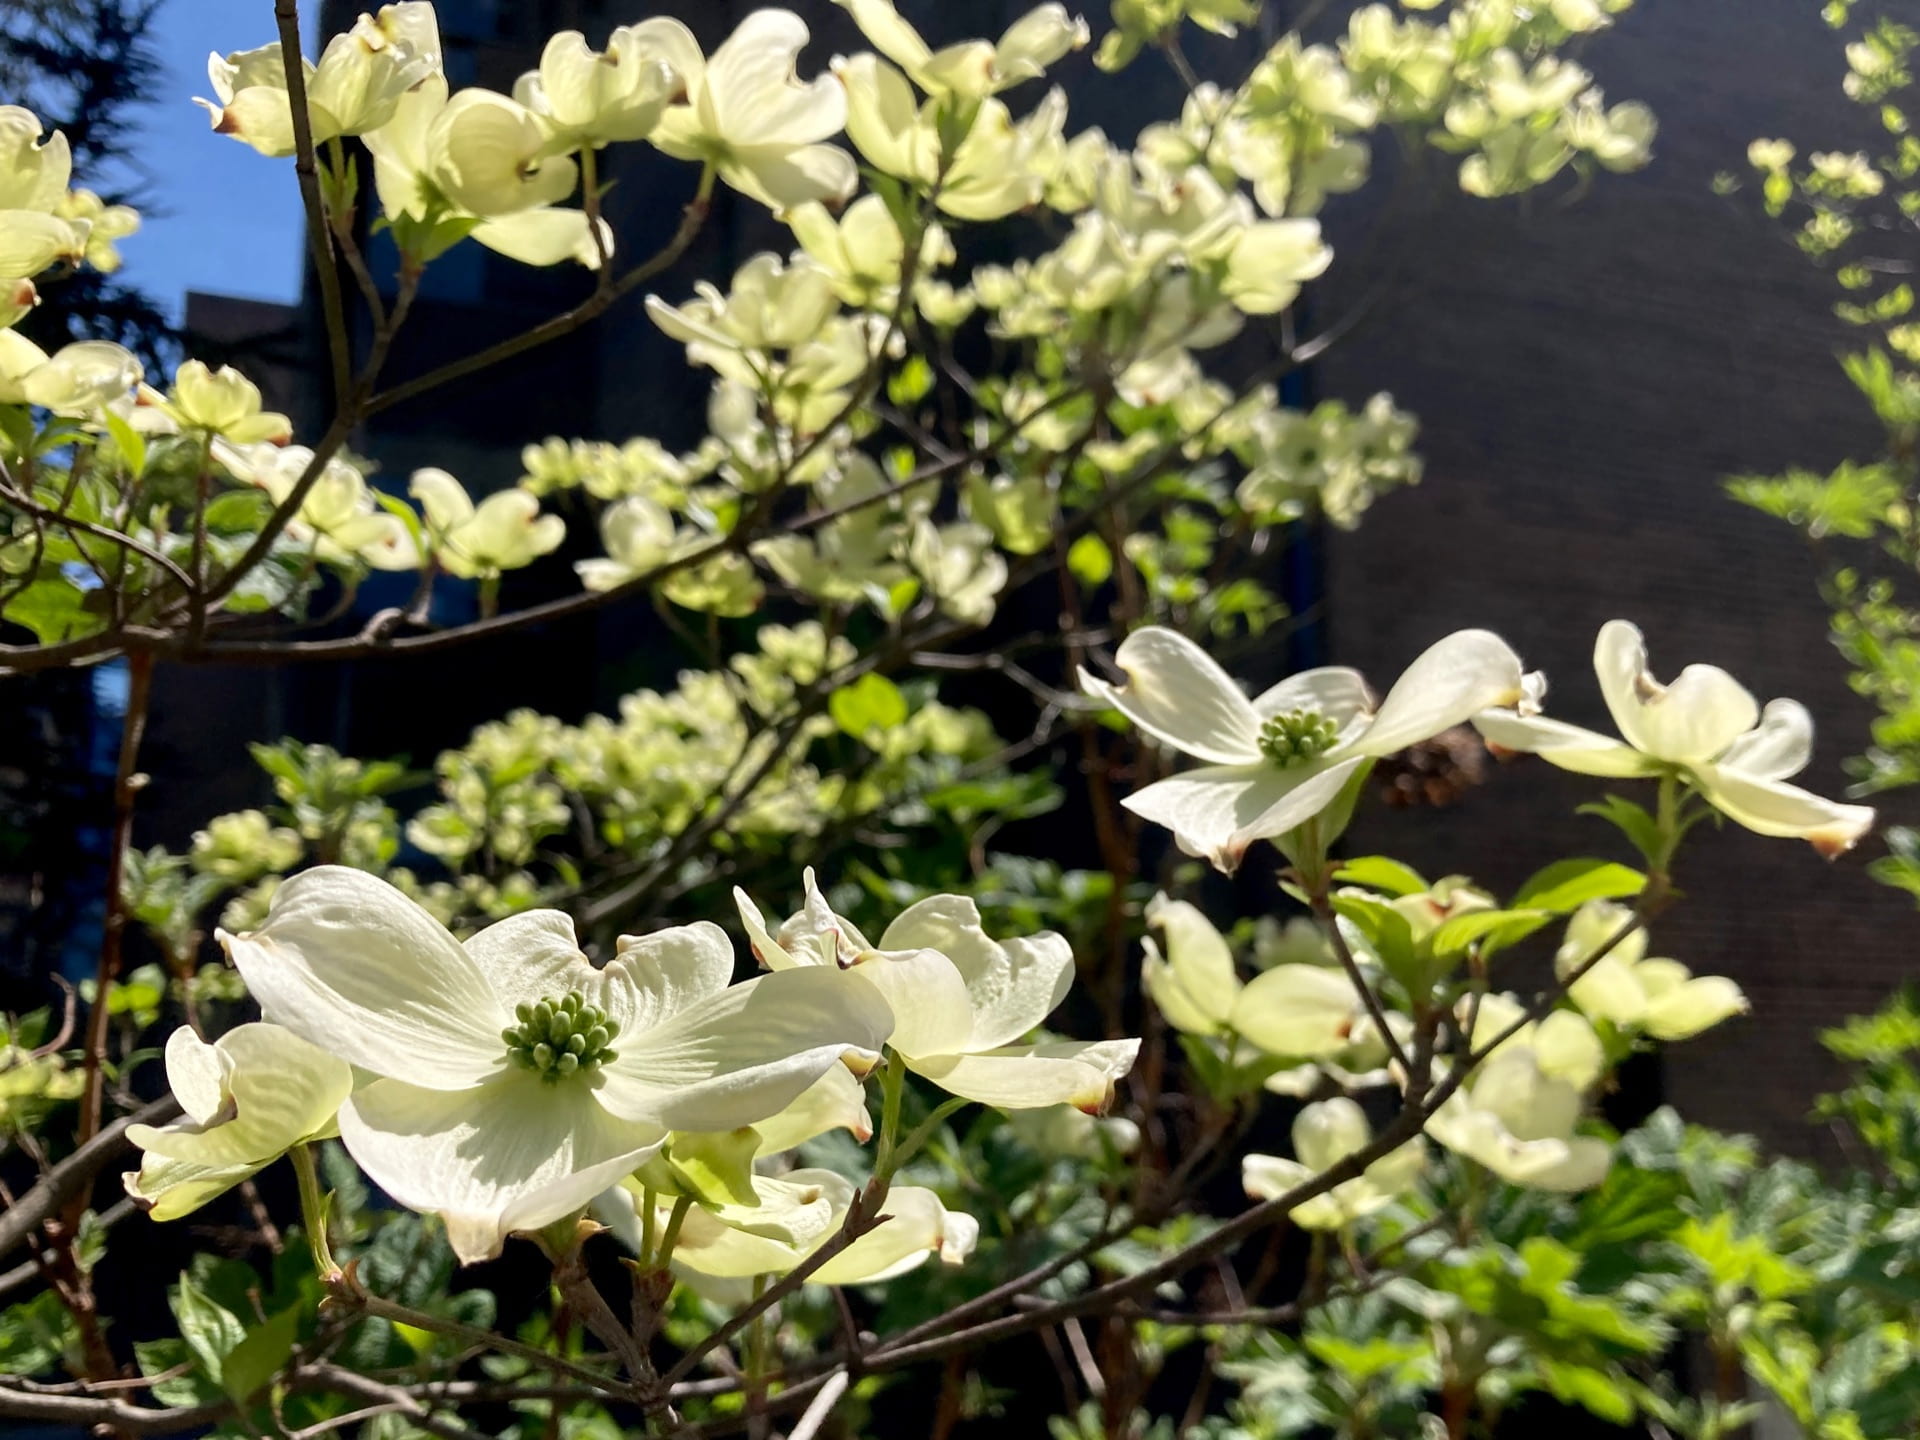 Dogwood flowers, Cornus florida, highlighted by afternoon sun.